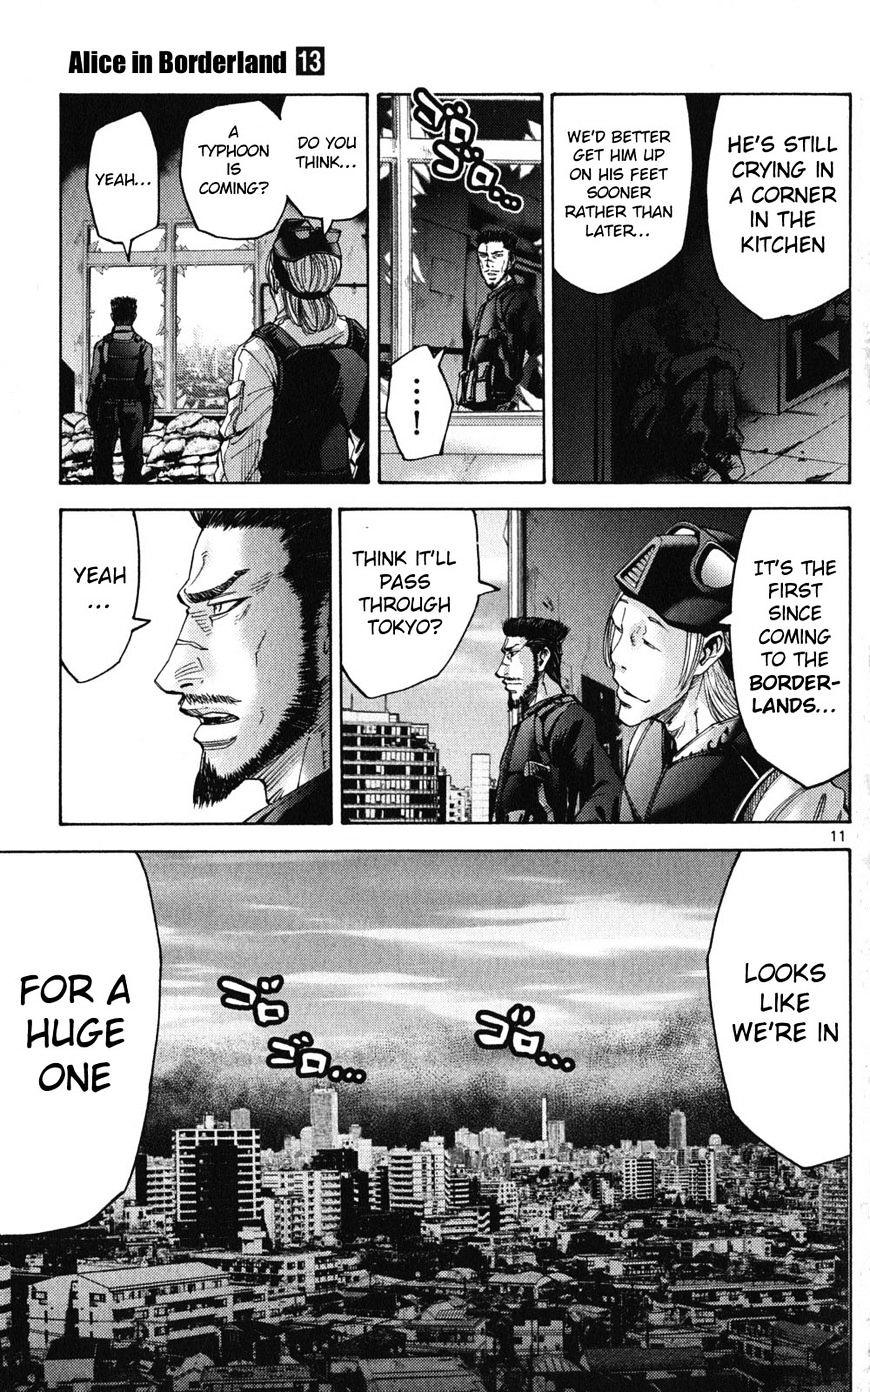 Imawa No Kuni No Alice Chapter 49.1 : Side Story 5 - King Of Spades (1) page 10 - Mangakakalot